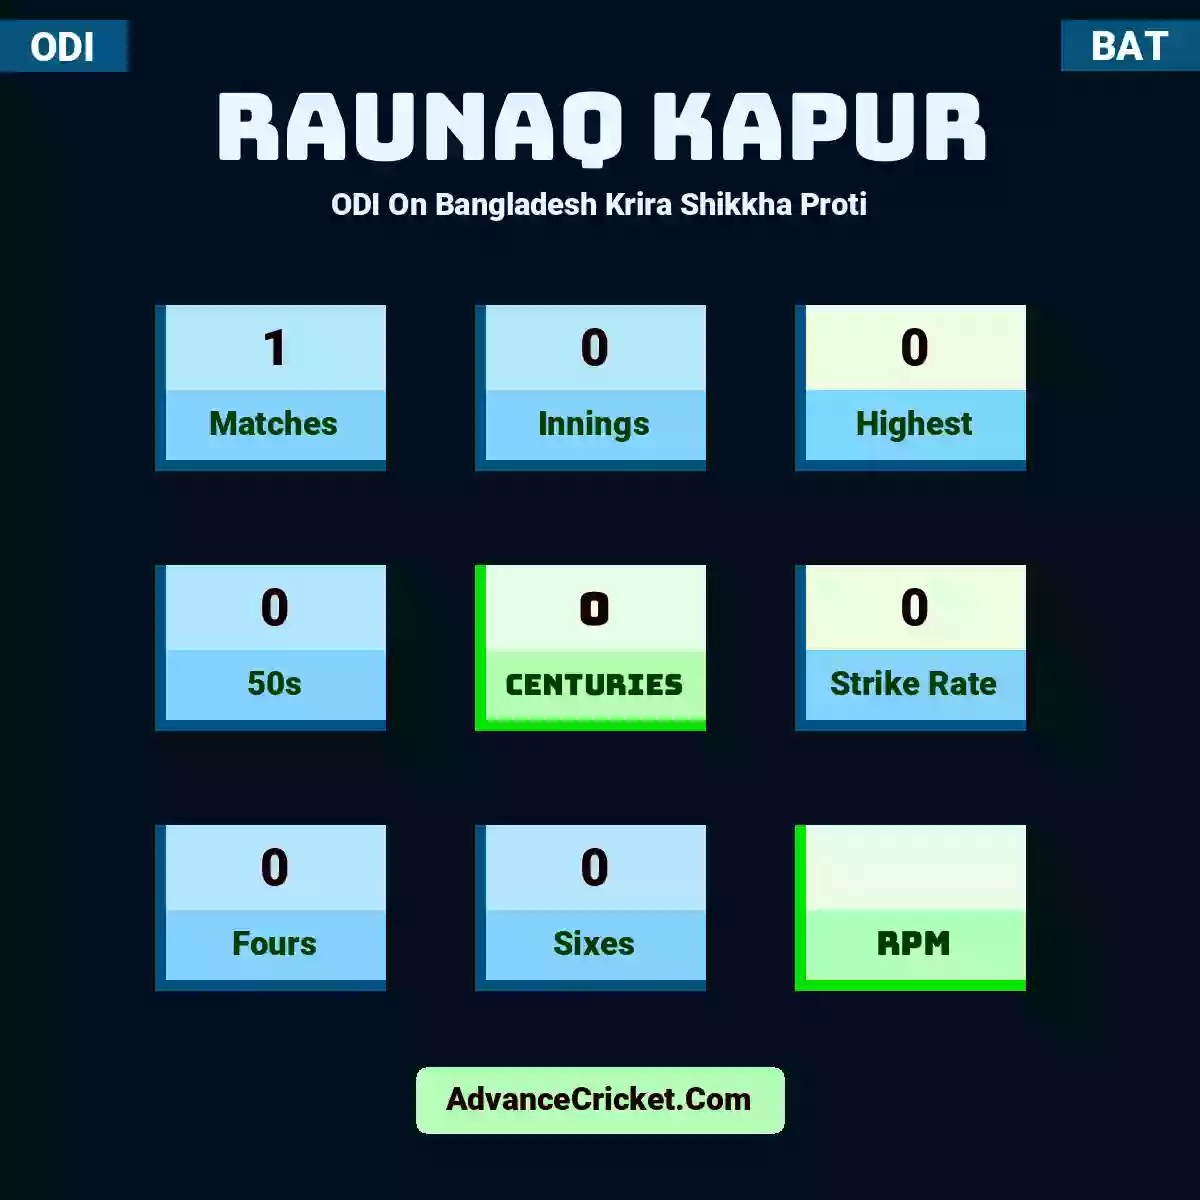 Raunaq Kapur ODI  On Bangladesh Krira Shikkha Proti, Raunaq Kapur played 1 matches, scored 0 runs as highest, 0 half-centuries, and 0 centuries, with a strike rate of 0. R.Kapur hit 0 fours and 0 sixes.